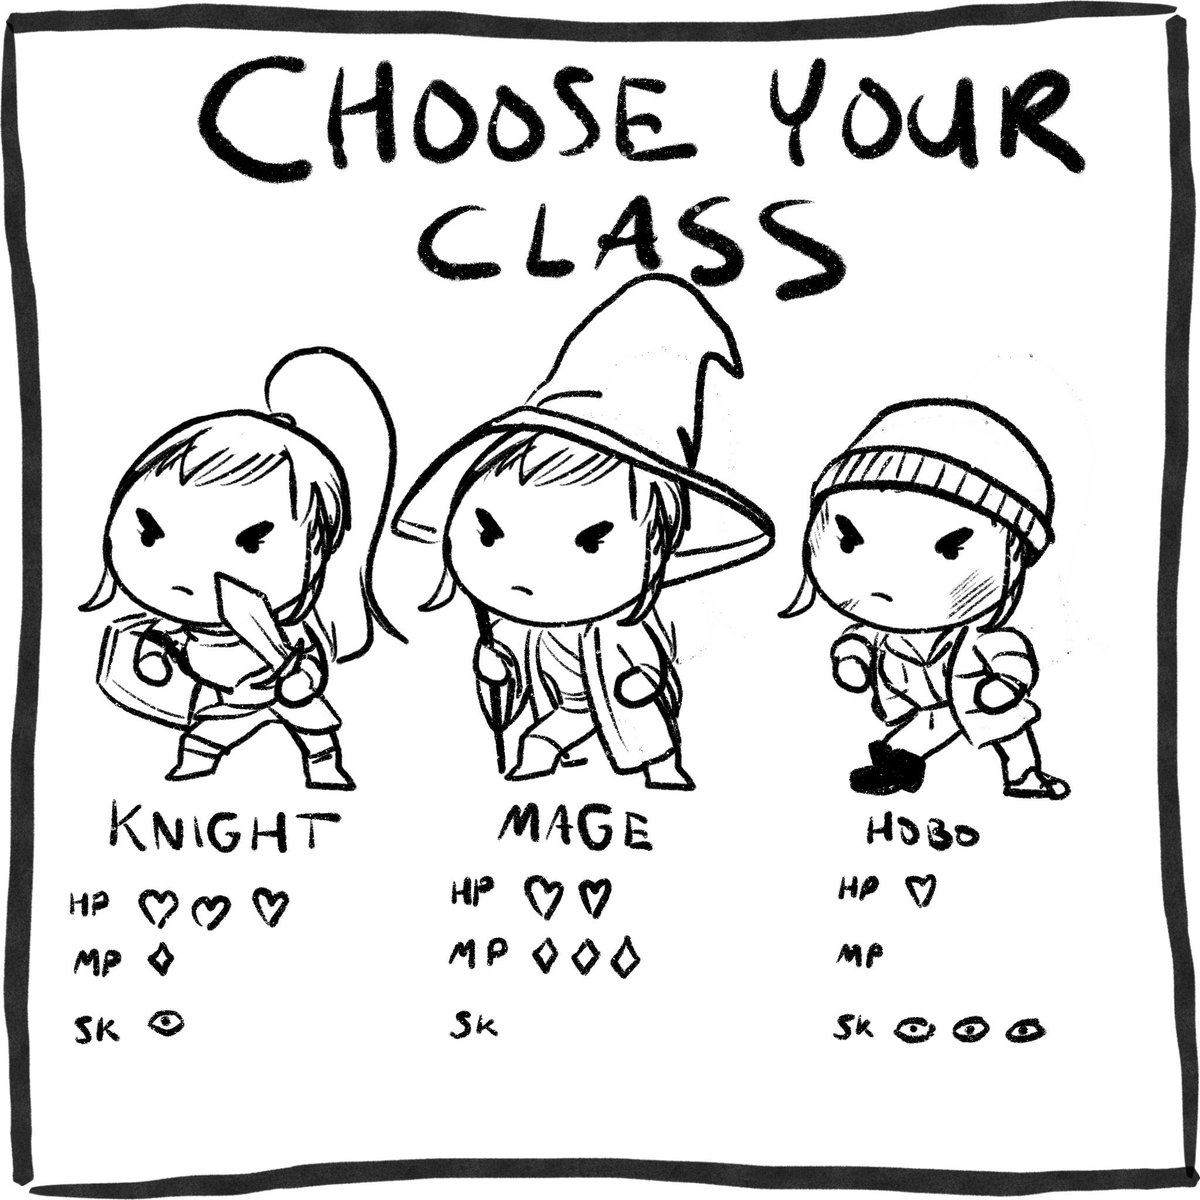 Chose your class: 
Knight (3 health, 1 magic, 1 sneak)
Mage (2 health, 3 magic, 0 sneak)
Hobo (1 health, 0 magic, 3 sneak)

Vote below ⬇️ https://t.co/h3FPup9arn 